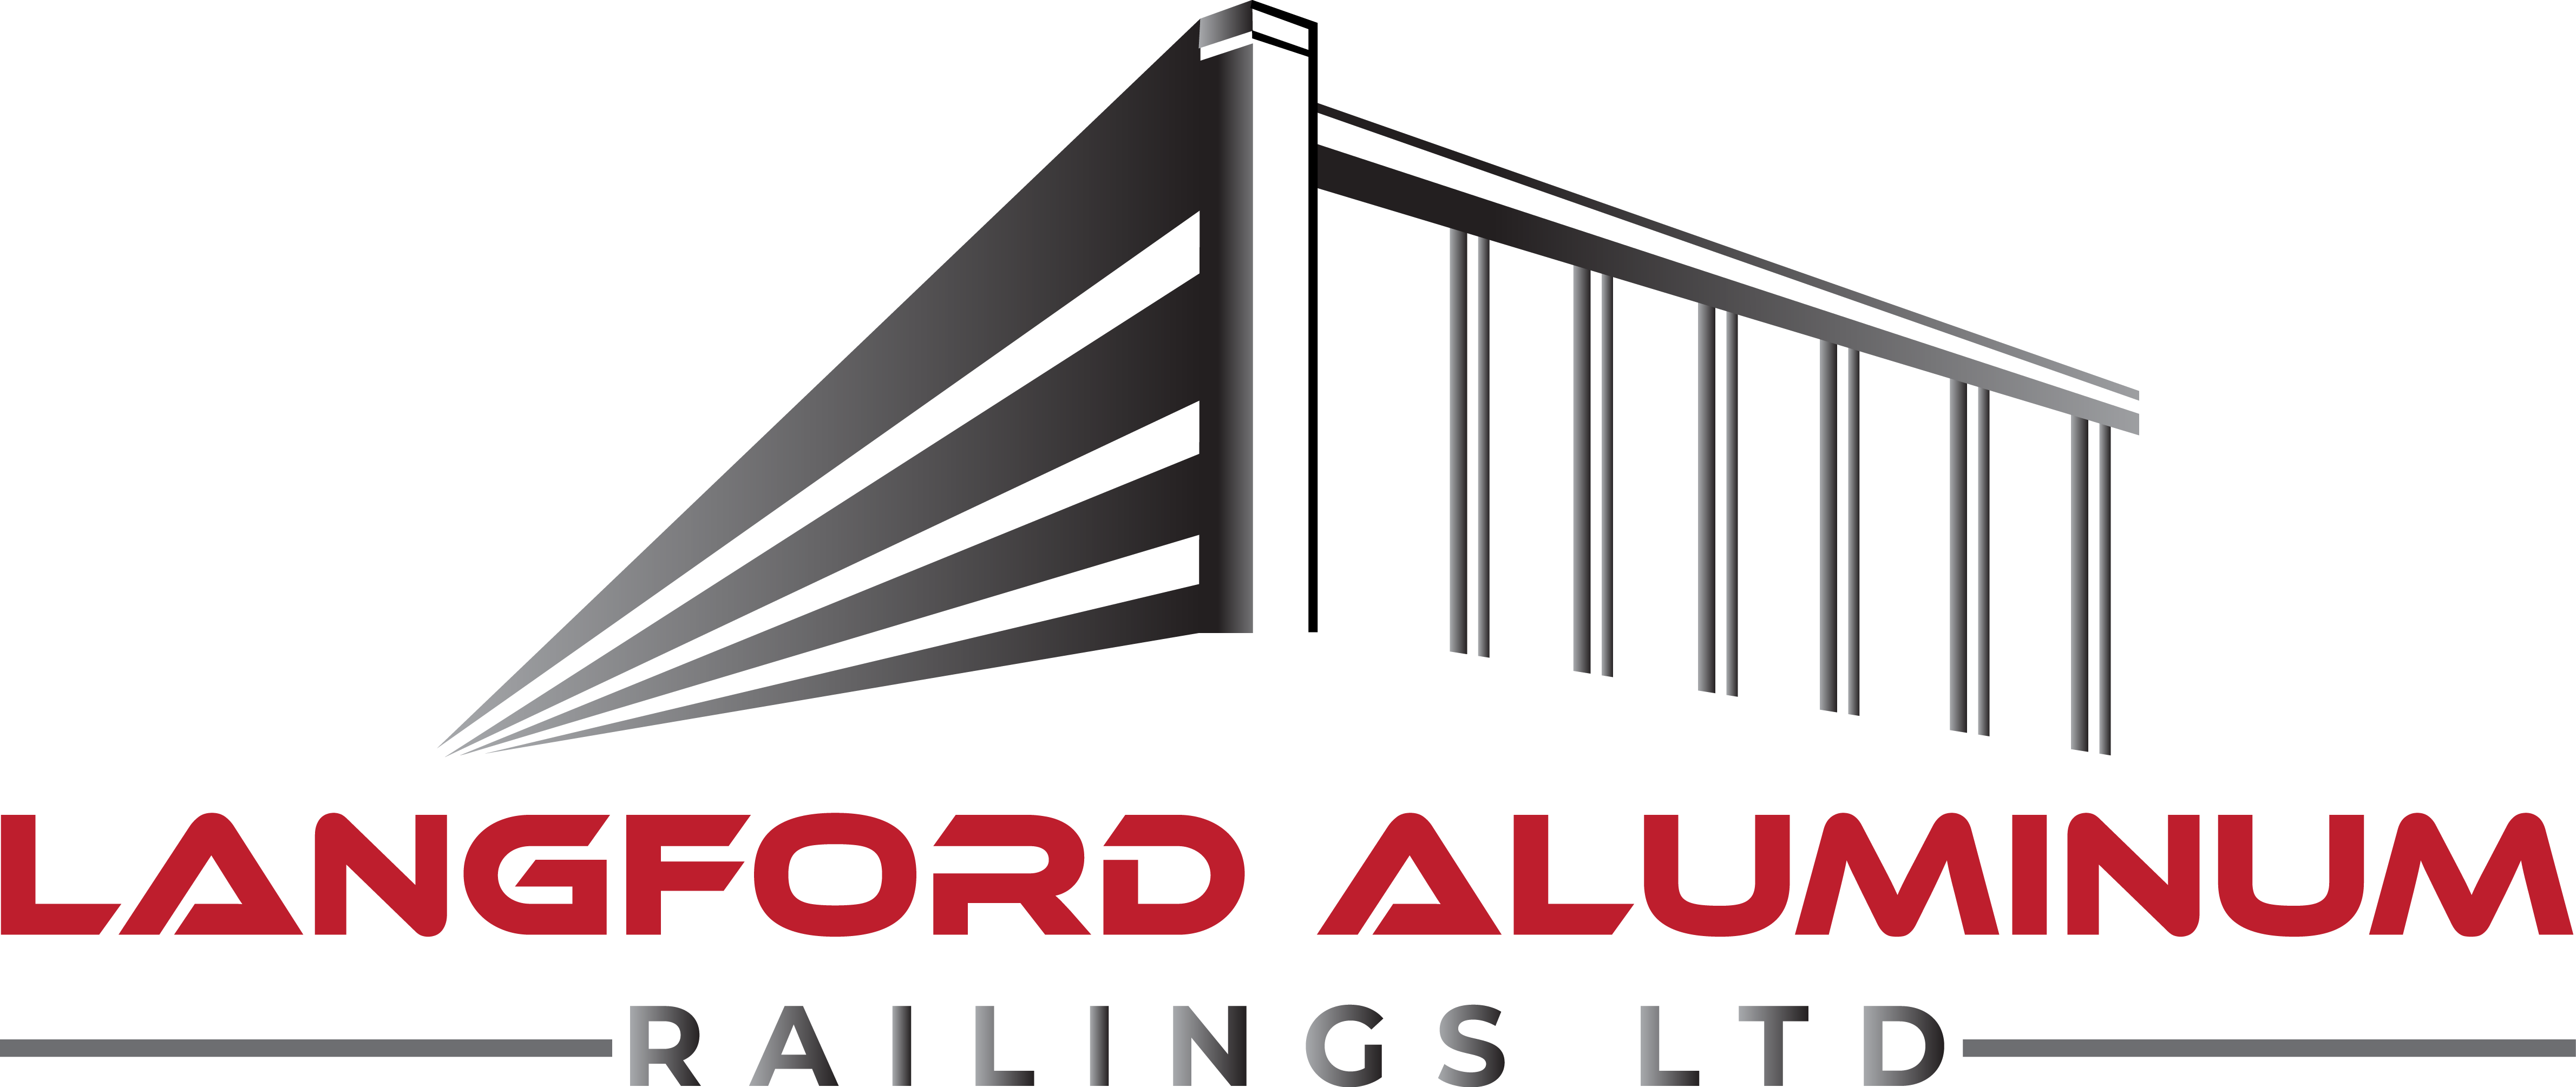 Langford aluminum railings